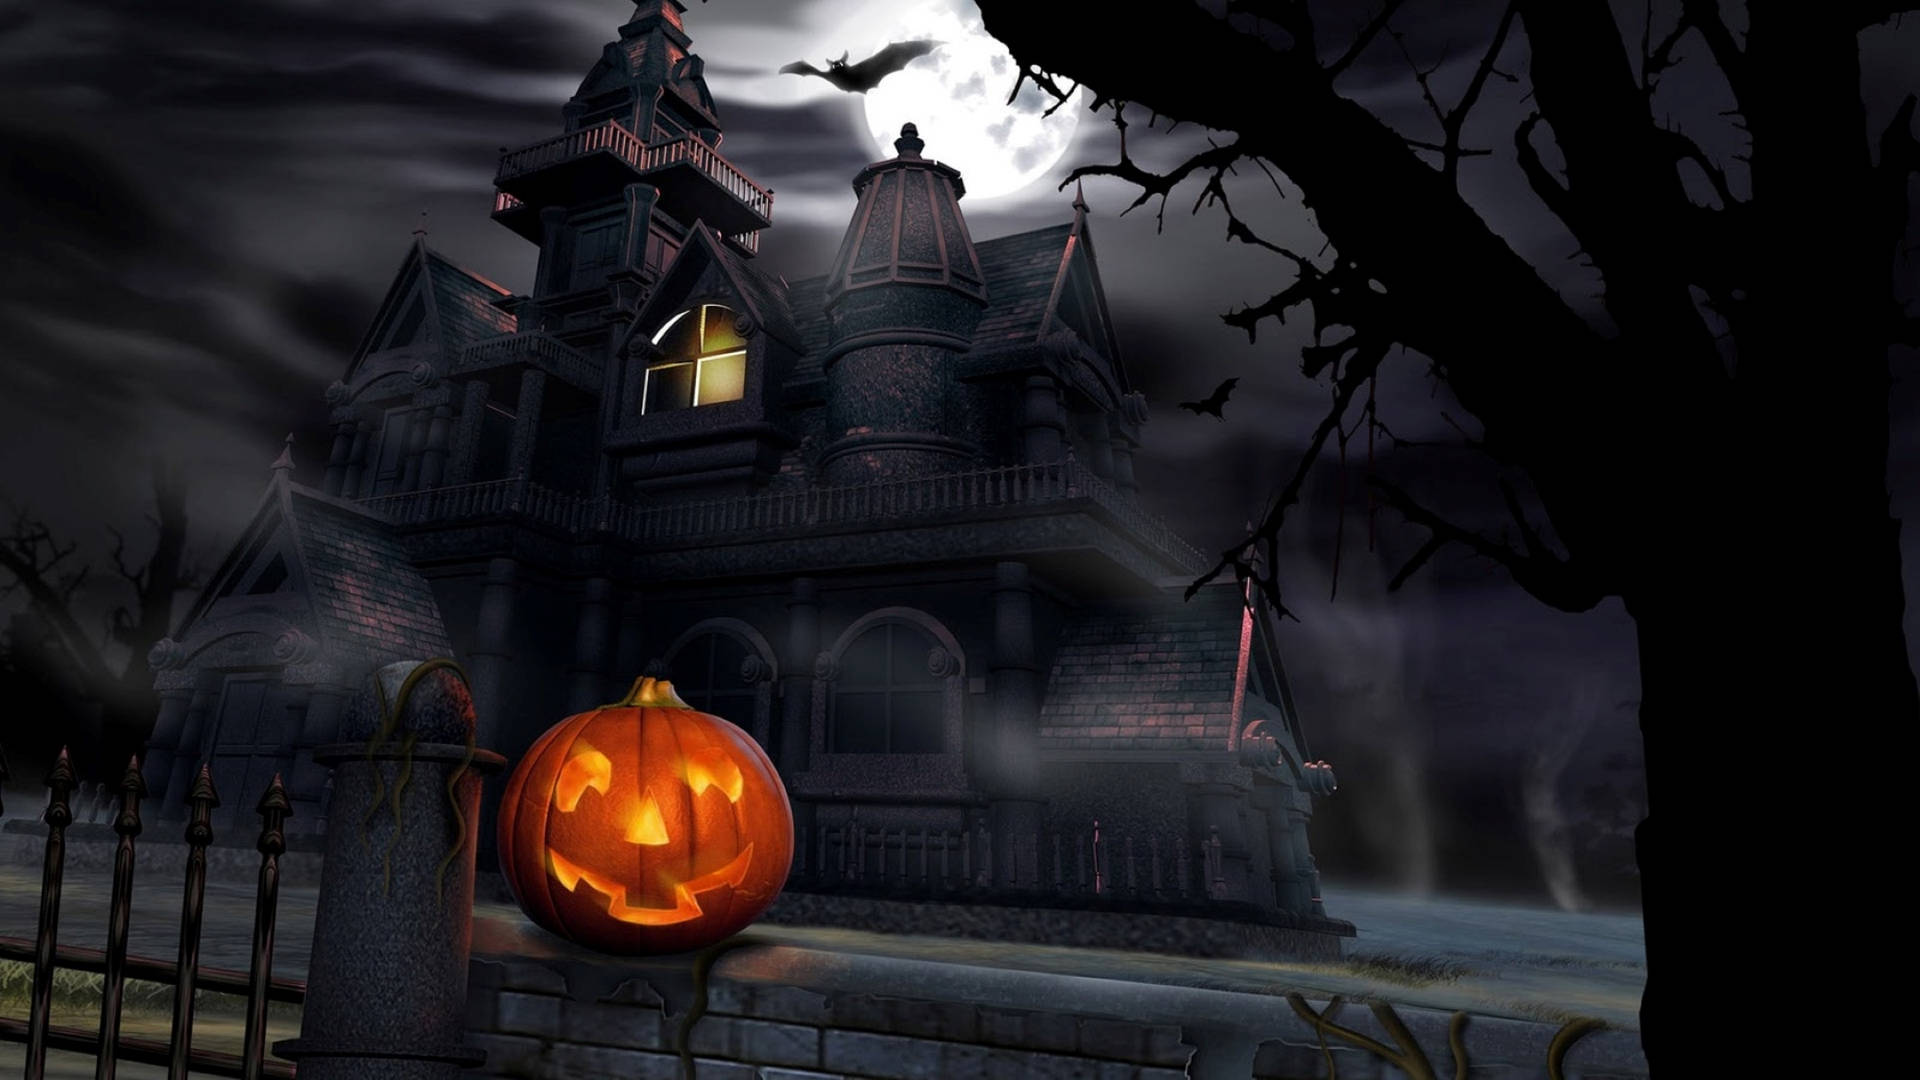 Spooky Halloween Aesthetic